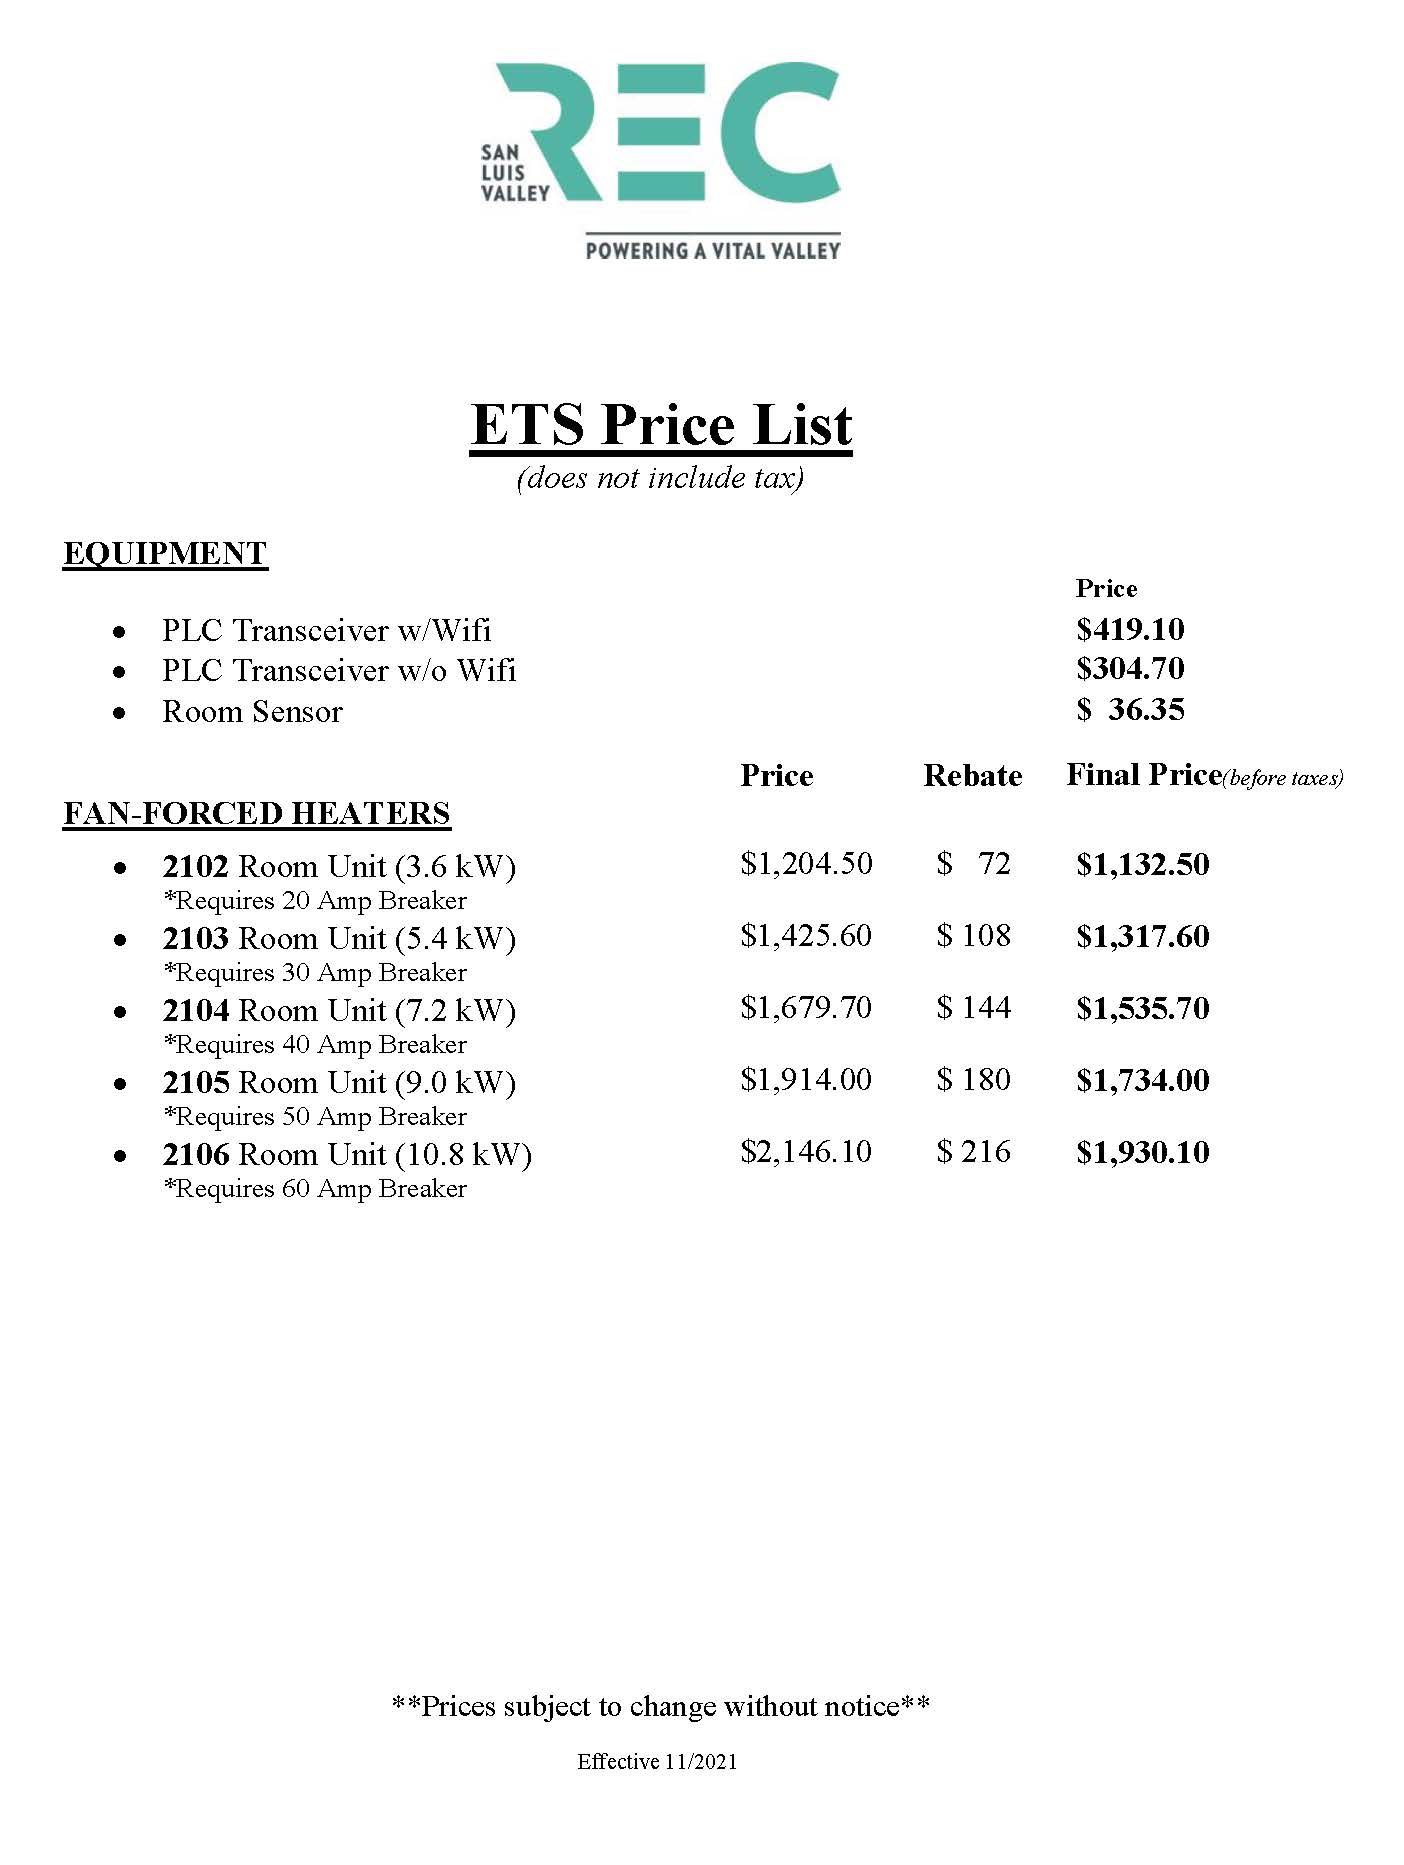 ETS price list